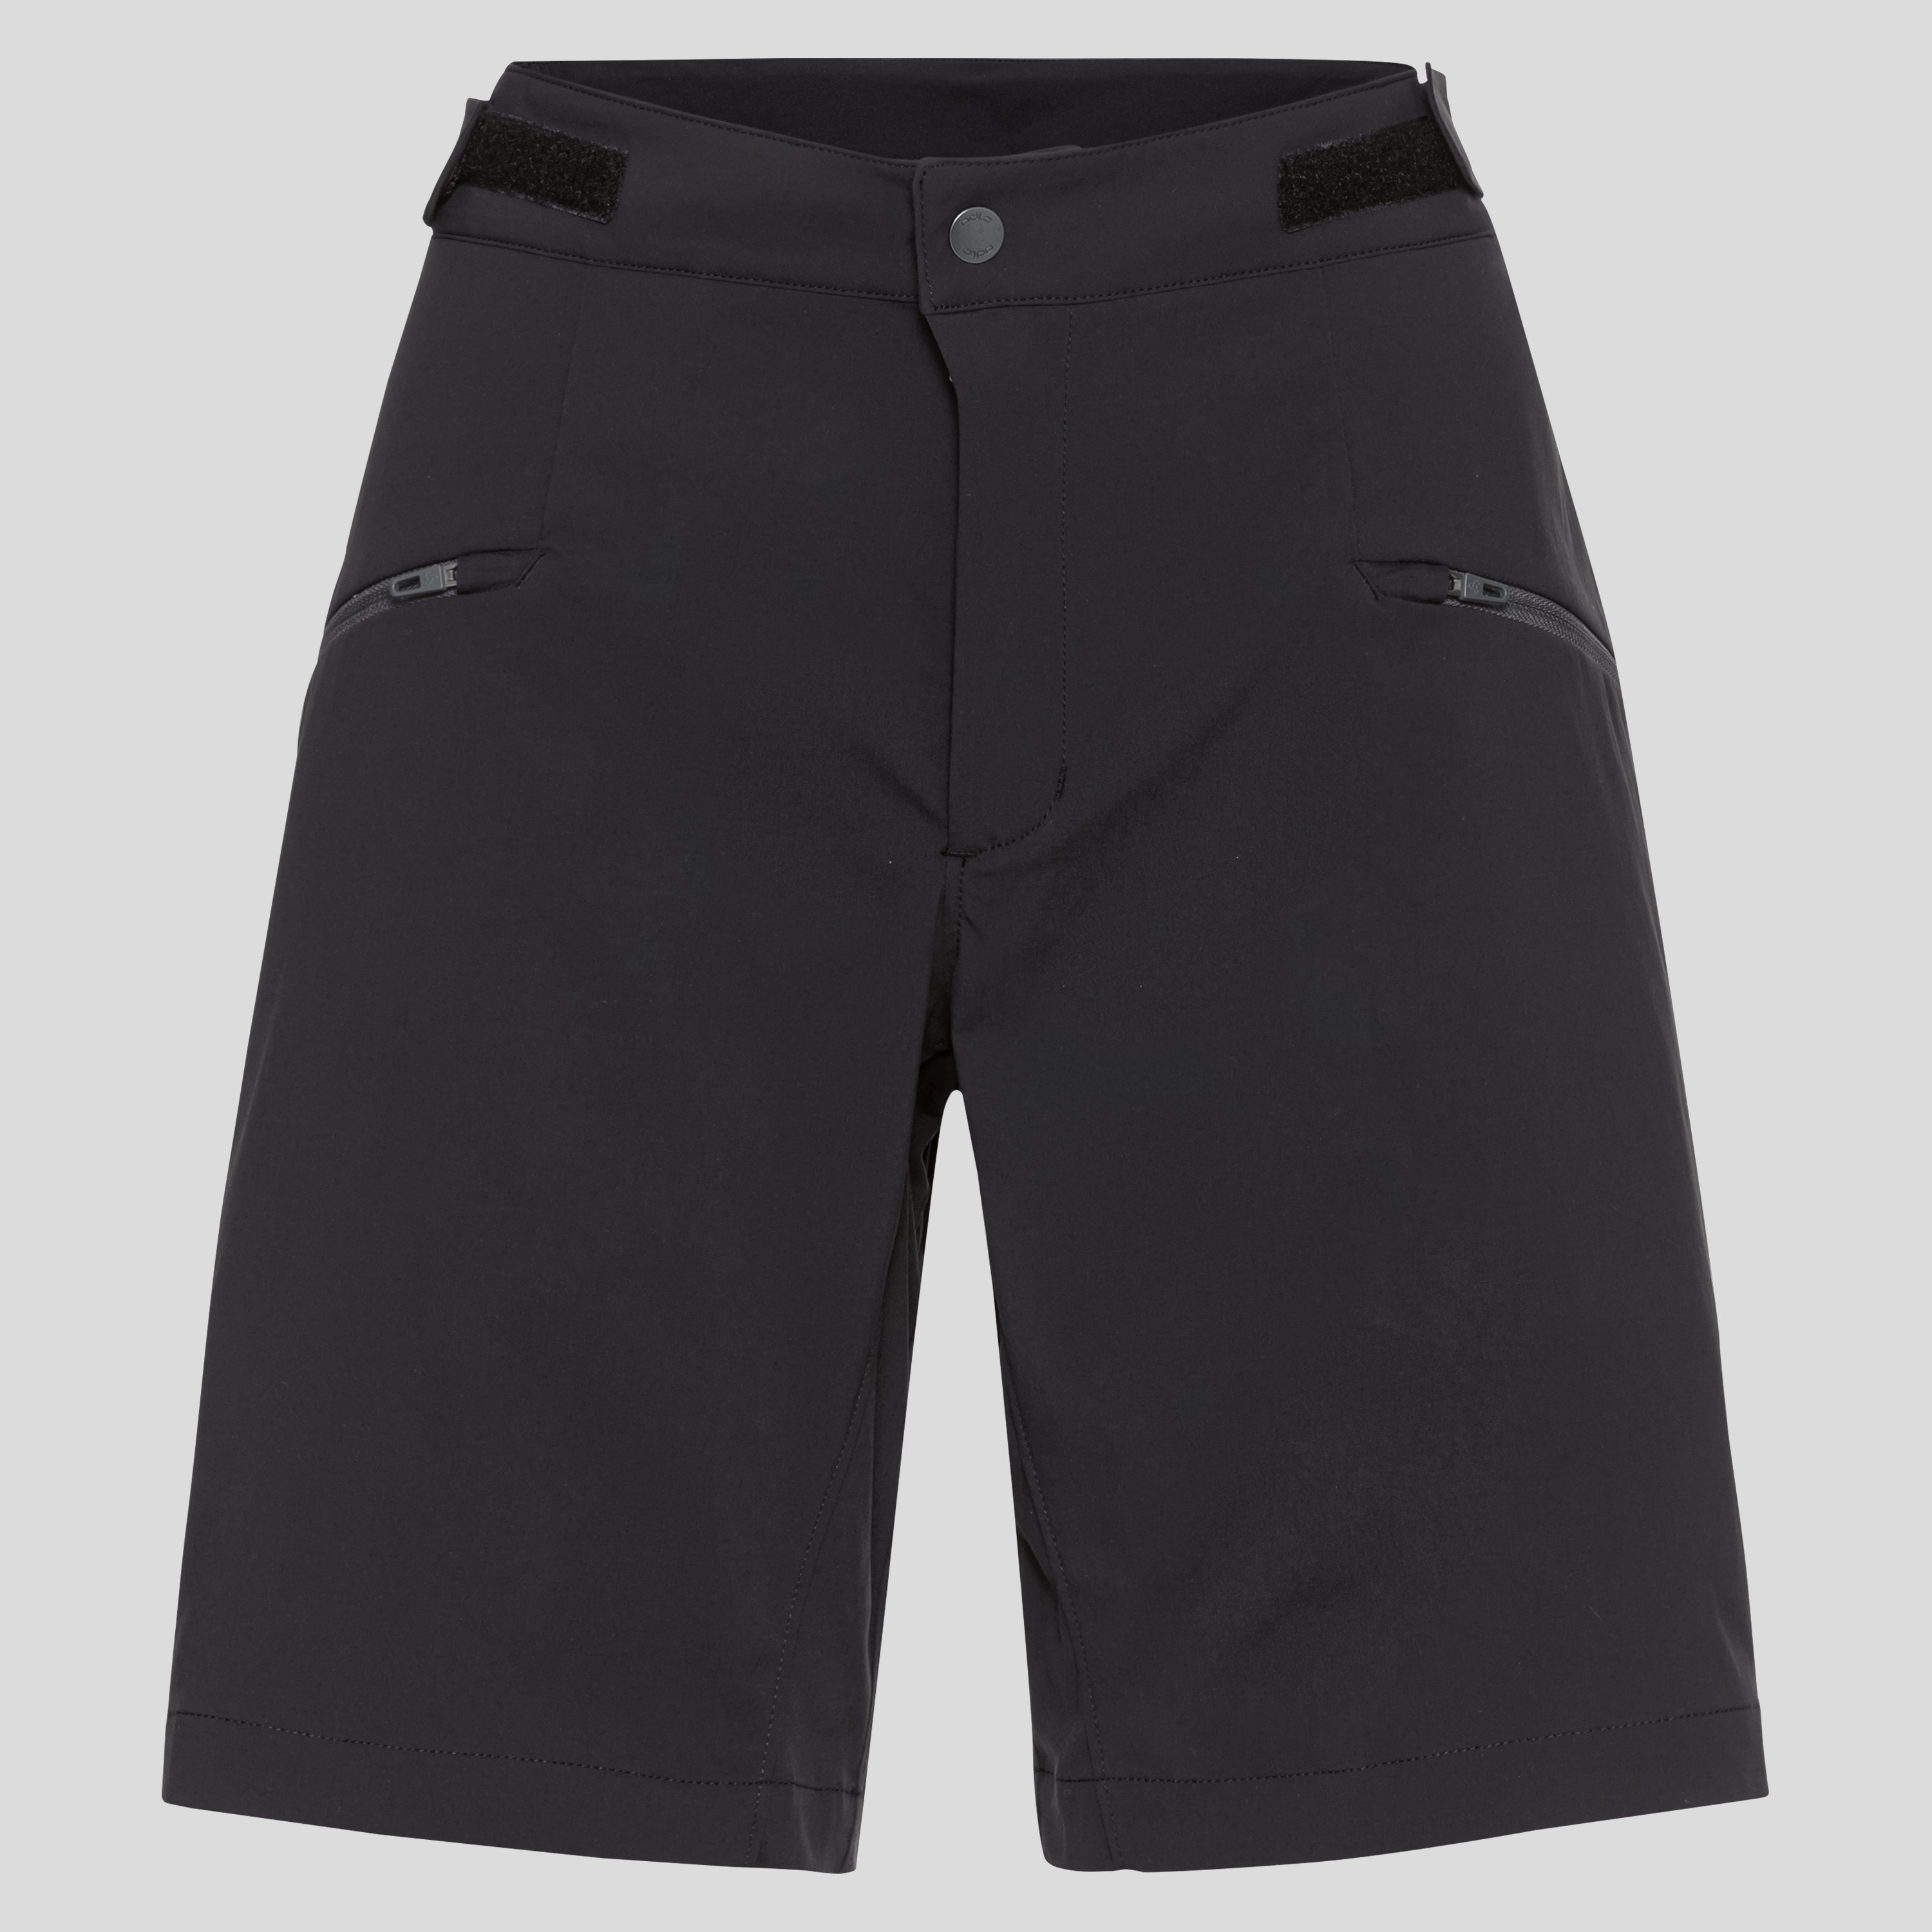 ODLO Morzine MTB-Shorts für Damen, 36, schwarz